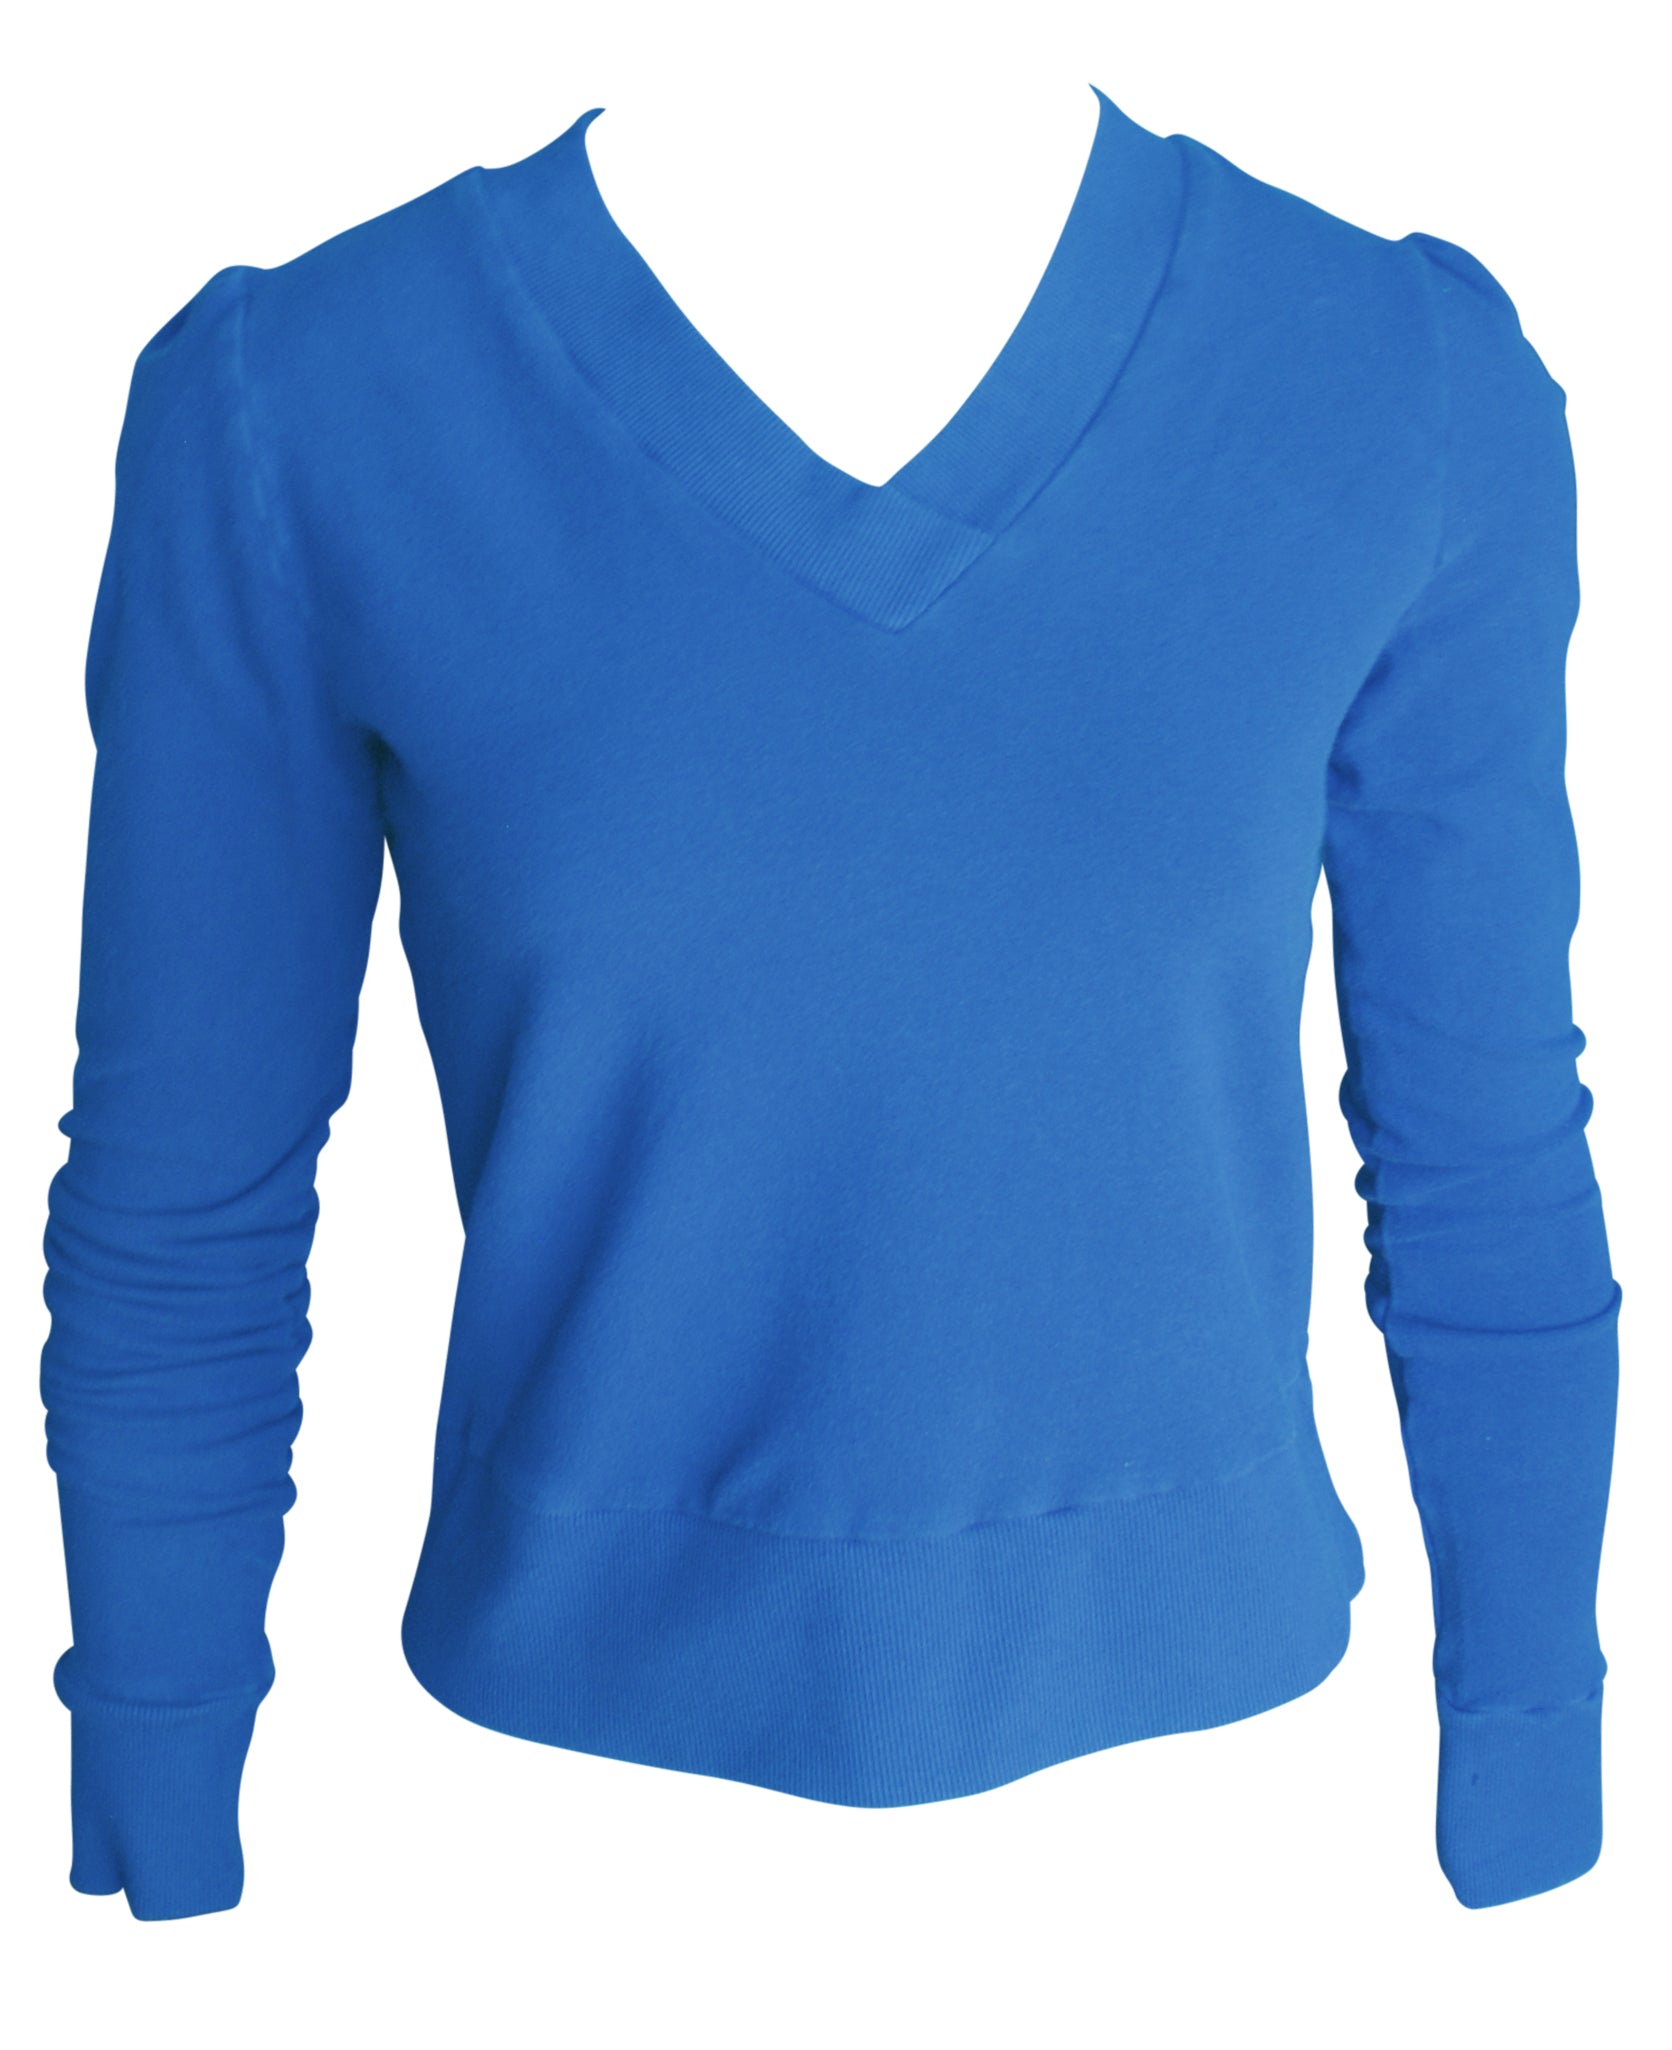 Bright blue French terry v-neck shirt with rib trim